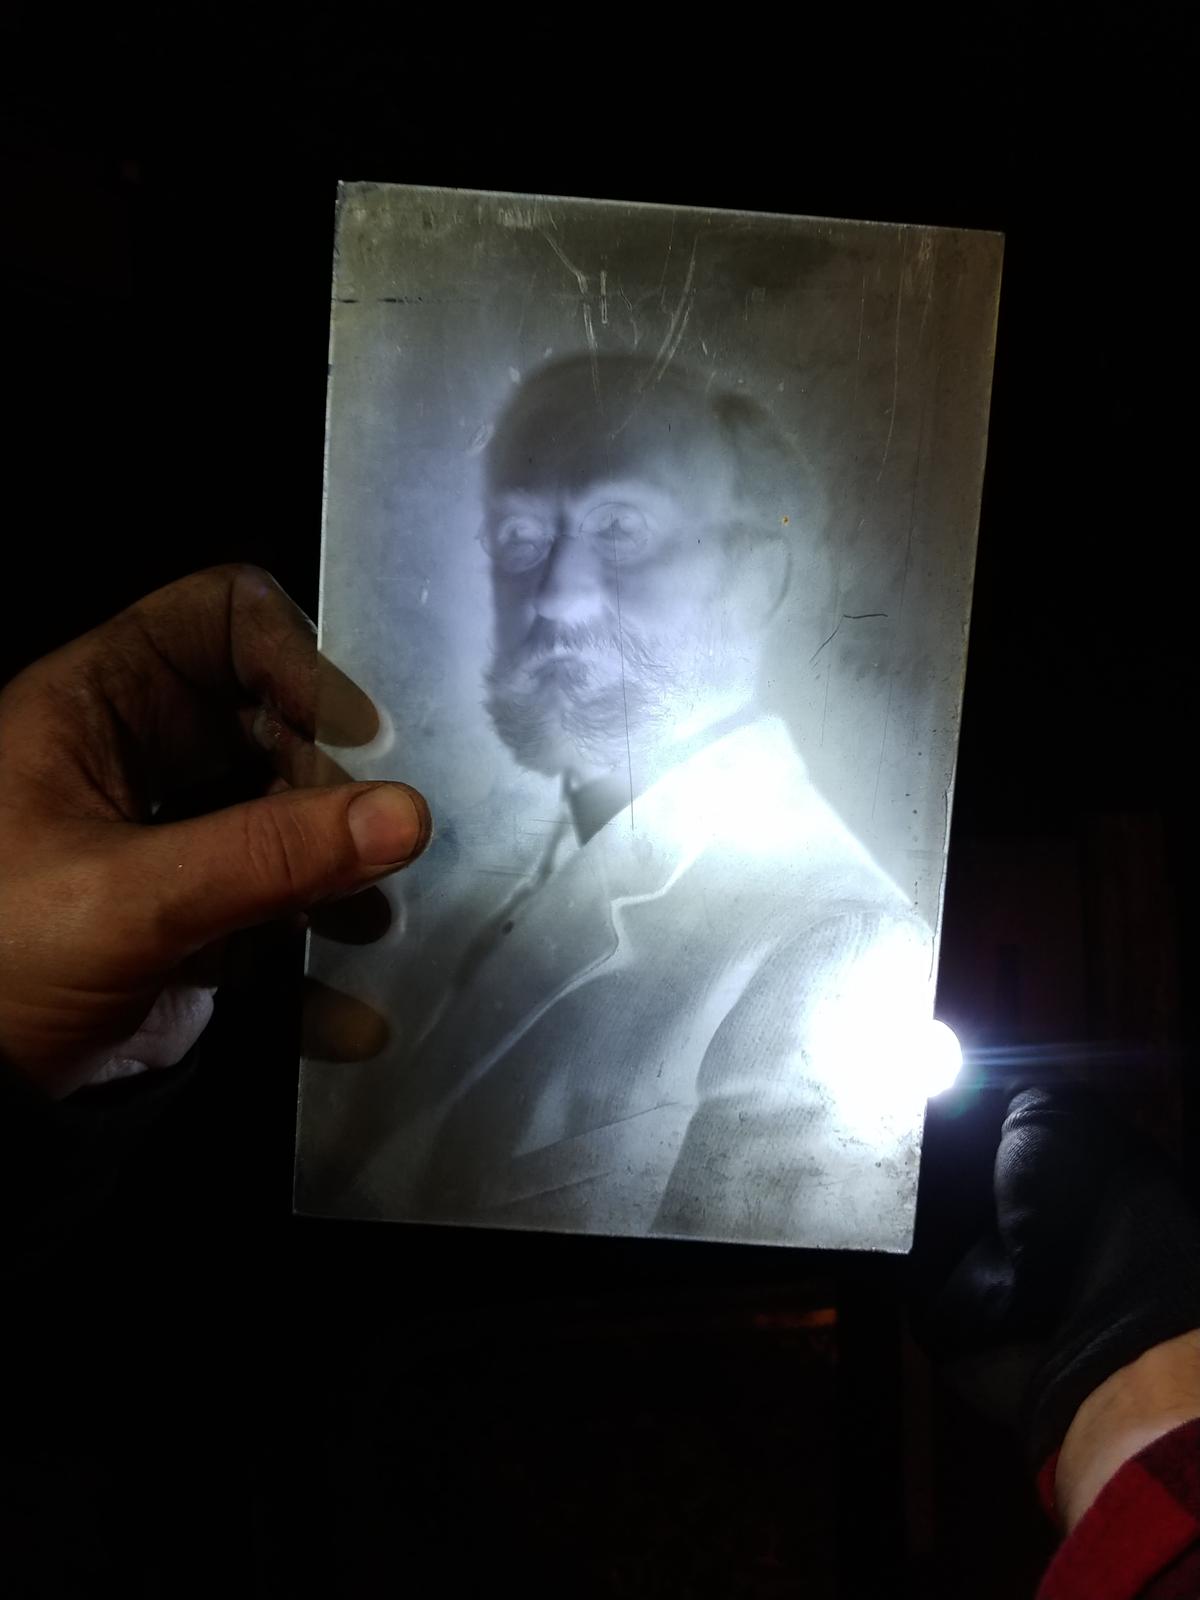 <a href="https://www.invaluable.com/auction-lot/antique-c-1895-photographer-james-ellery-hale-sel-c-4A04BE08F3">"Antique c. 1895 Photographer James Ellery Hale Self Portrait Glass Negative Gelatin Dry Plate."</a> (Courtesy of <a href="https://www.whitcombfirm.com/">David Whitcomb</a>)